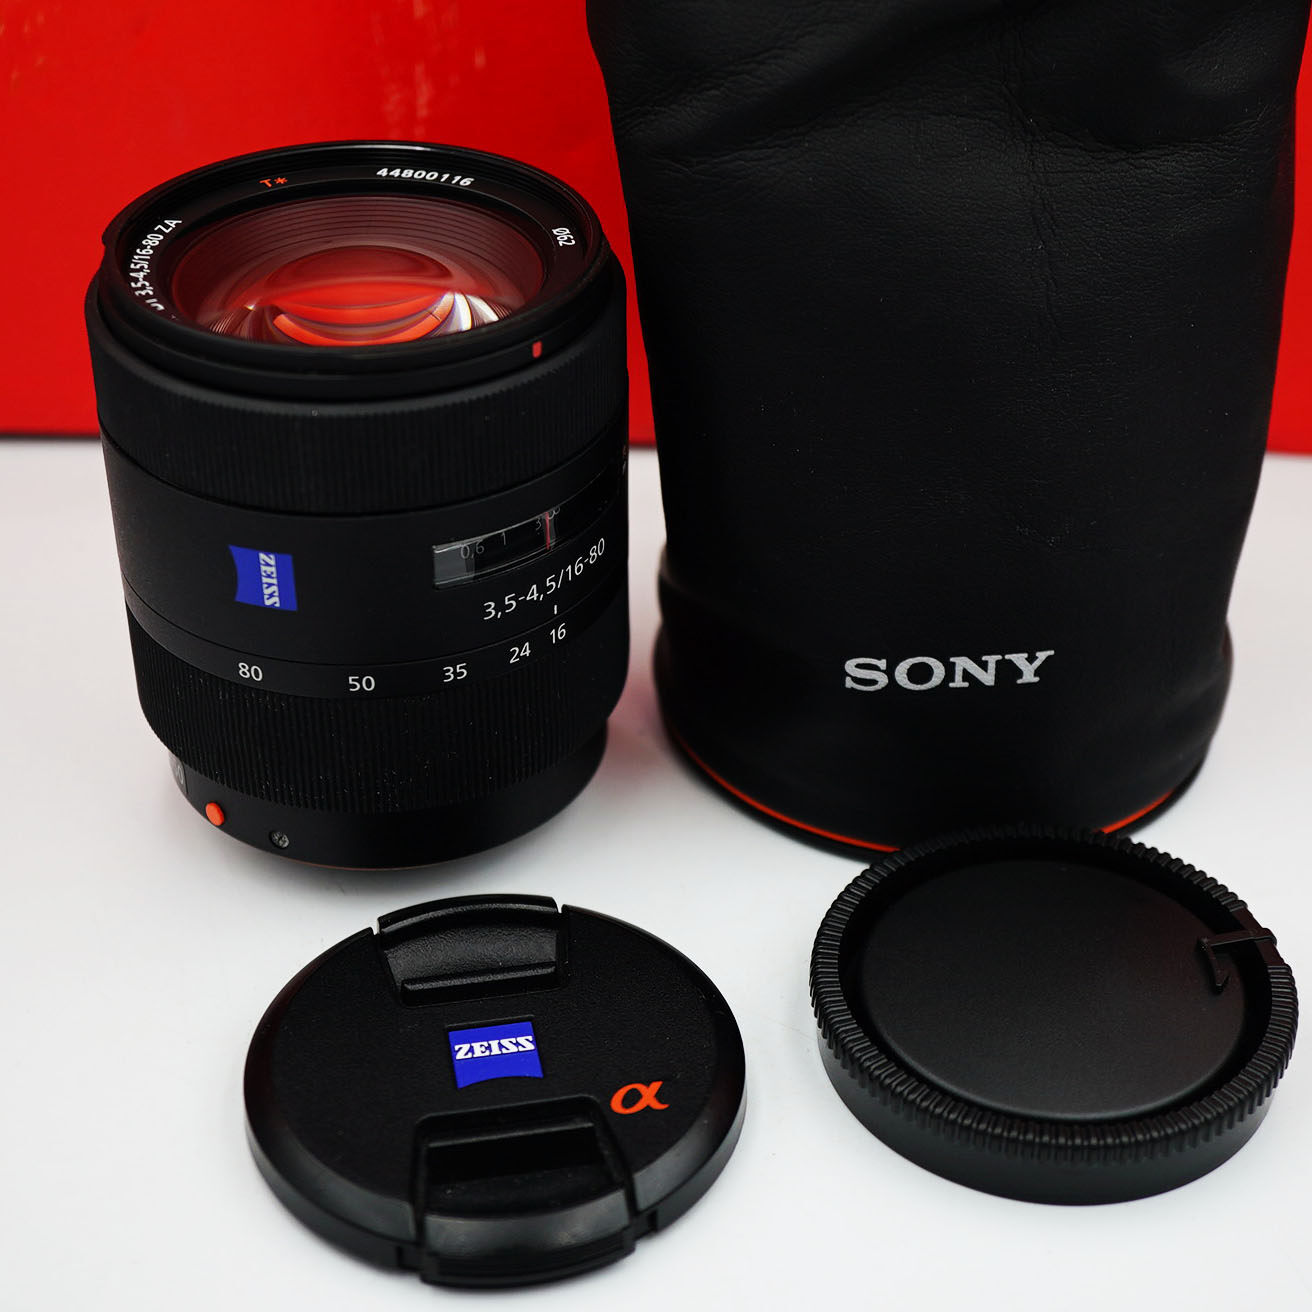 Carl Zeiss Sony Vario-Sonnar T* DT 16-80mm f/3.5-4.5 ZA Lens, 24 